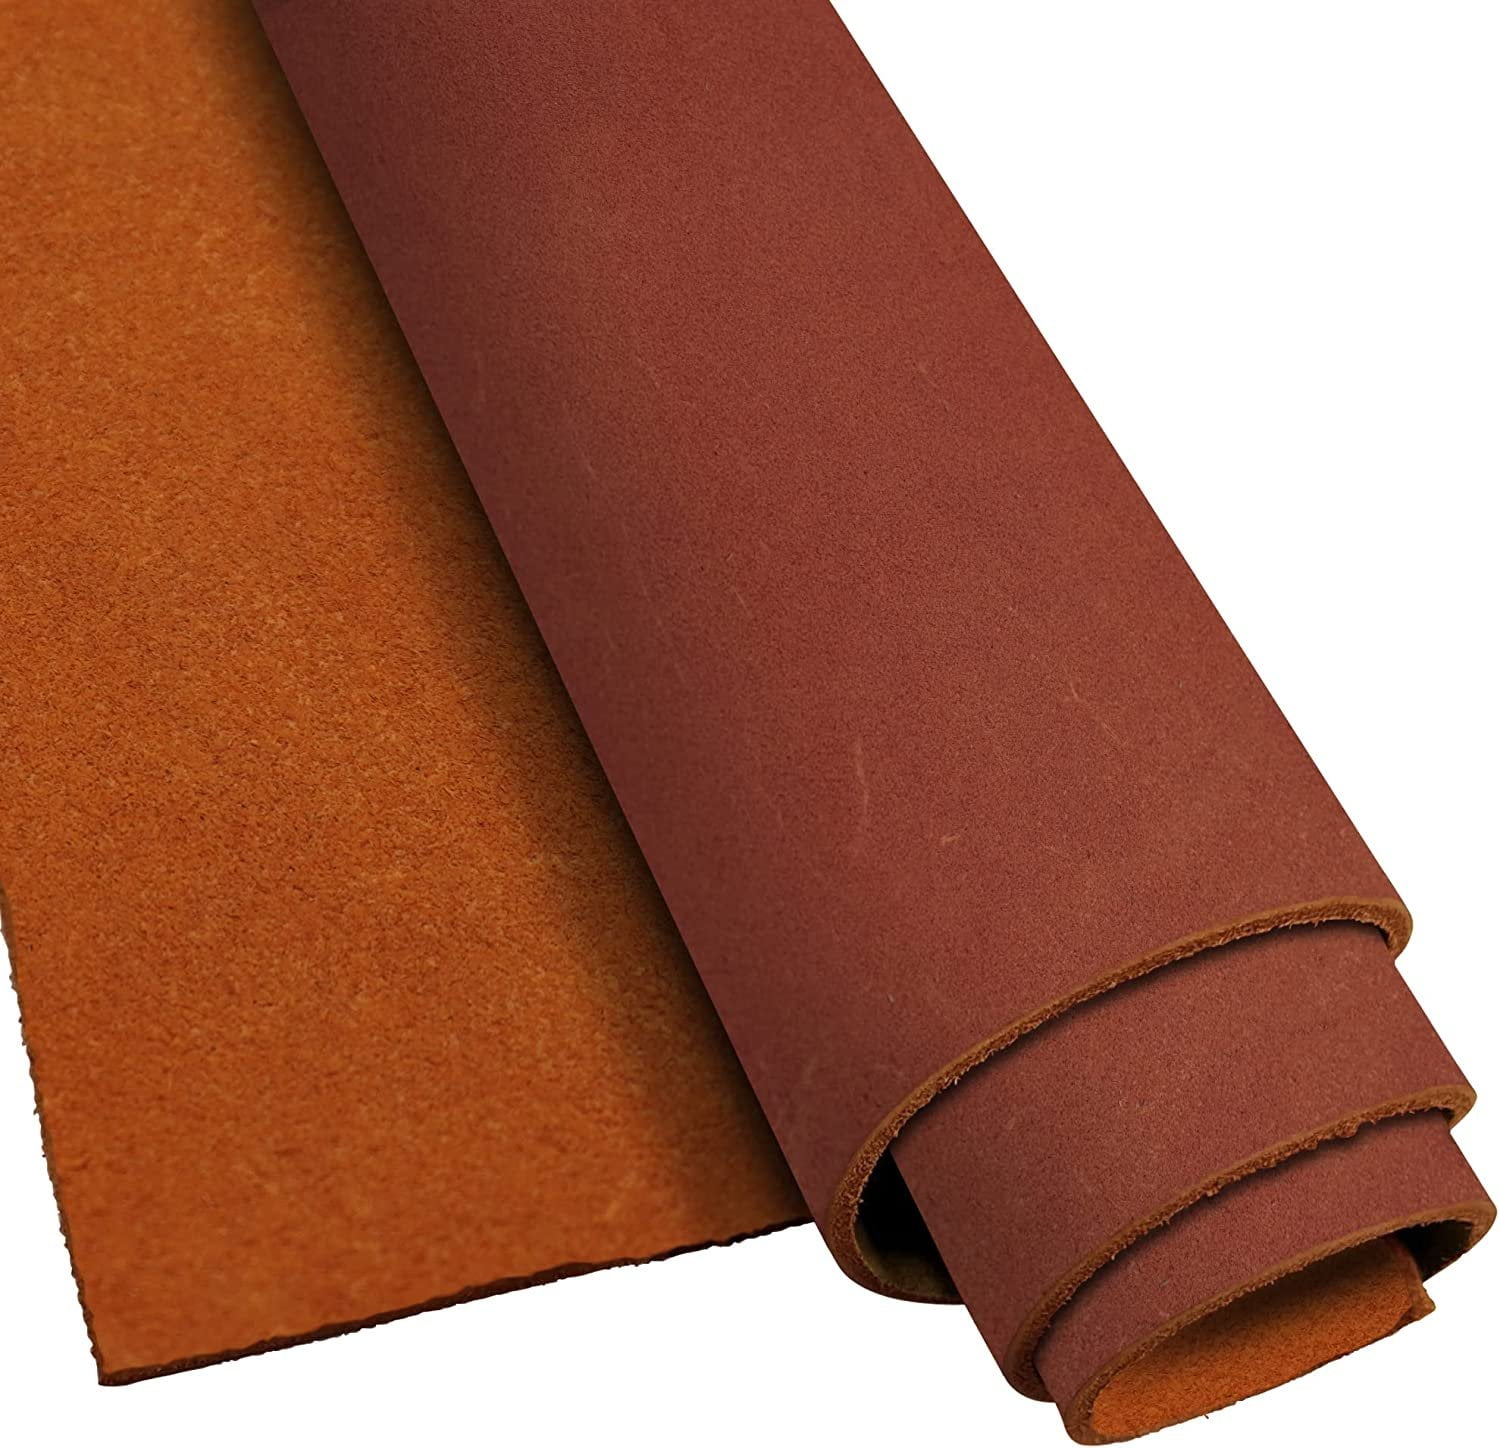 MIX Leather Scraps Colorful Leather Fabric Pieces Precut DIY